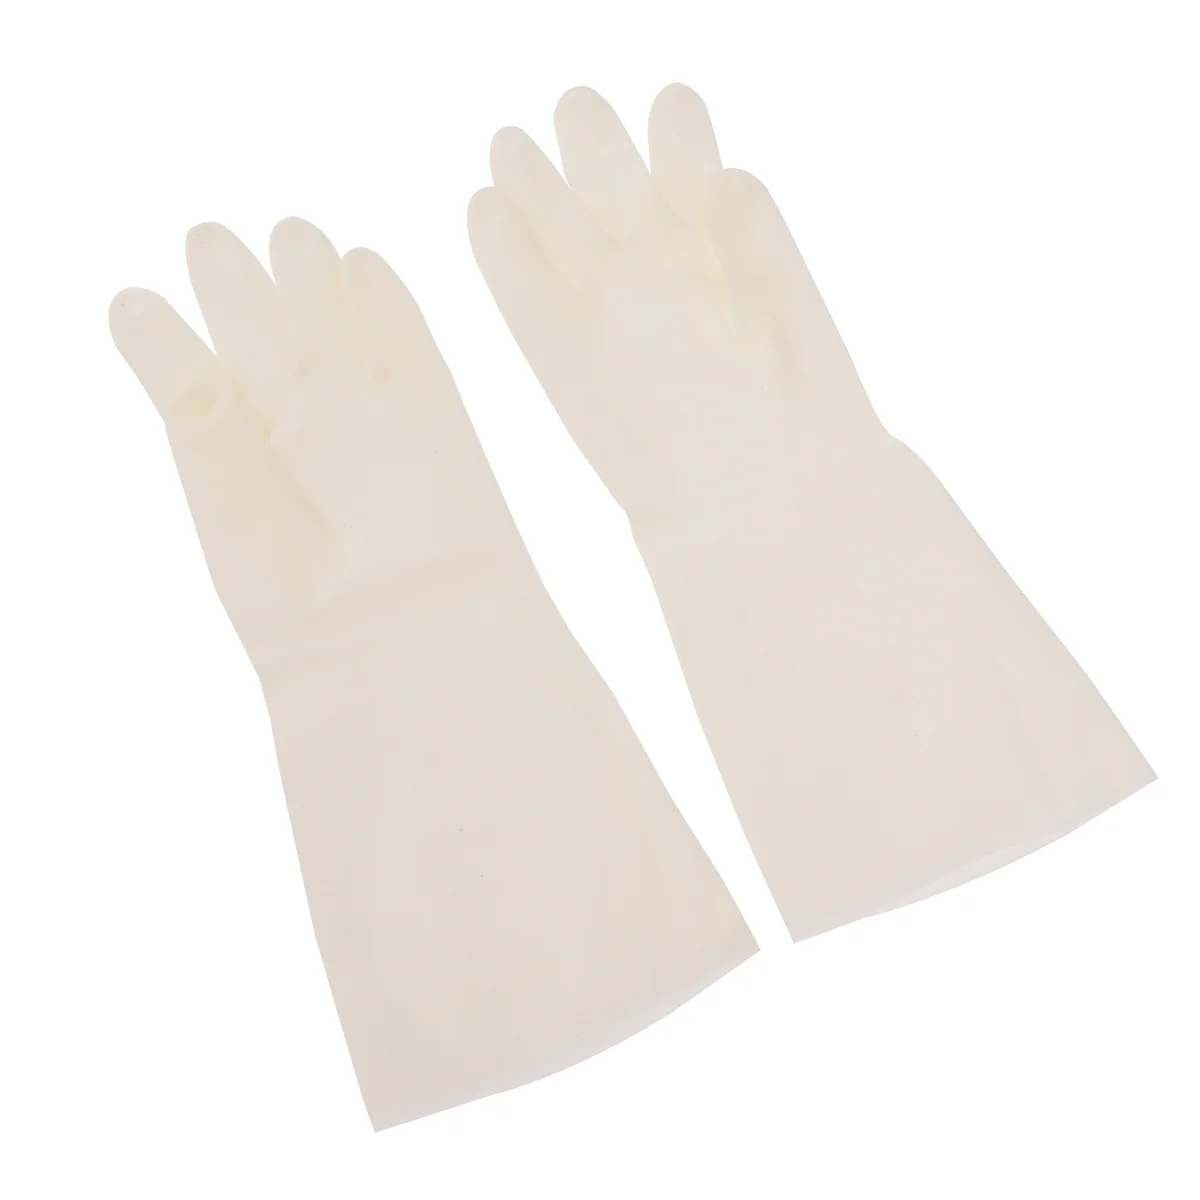 

1 пара перчаток для дома, перчатки для уборки, нескользящие перчатки для кухни, перчатки для мытья посуды-Размер S (белый)